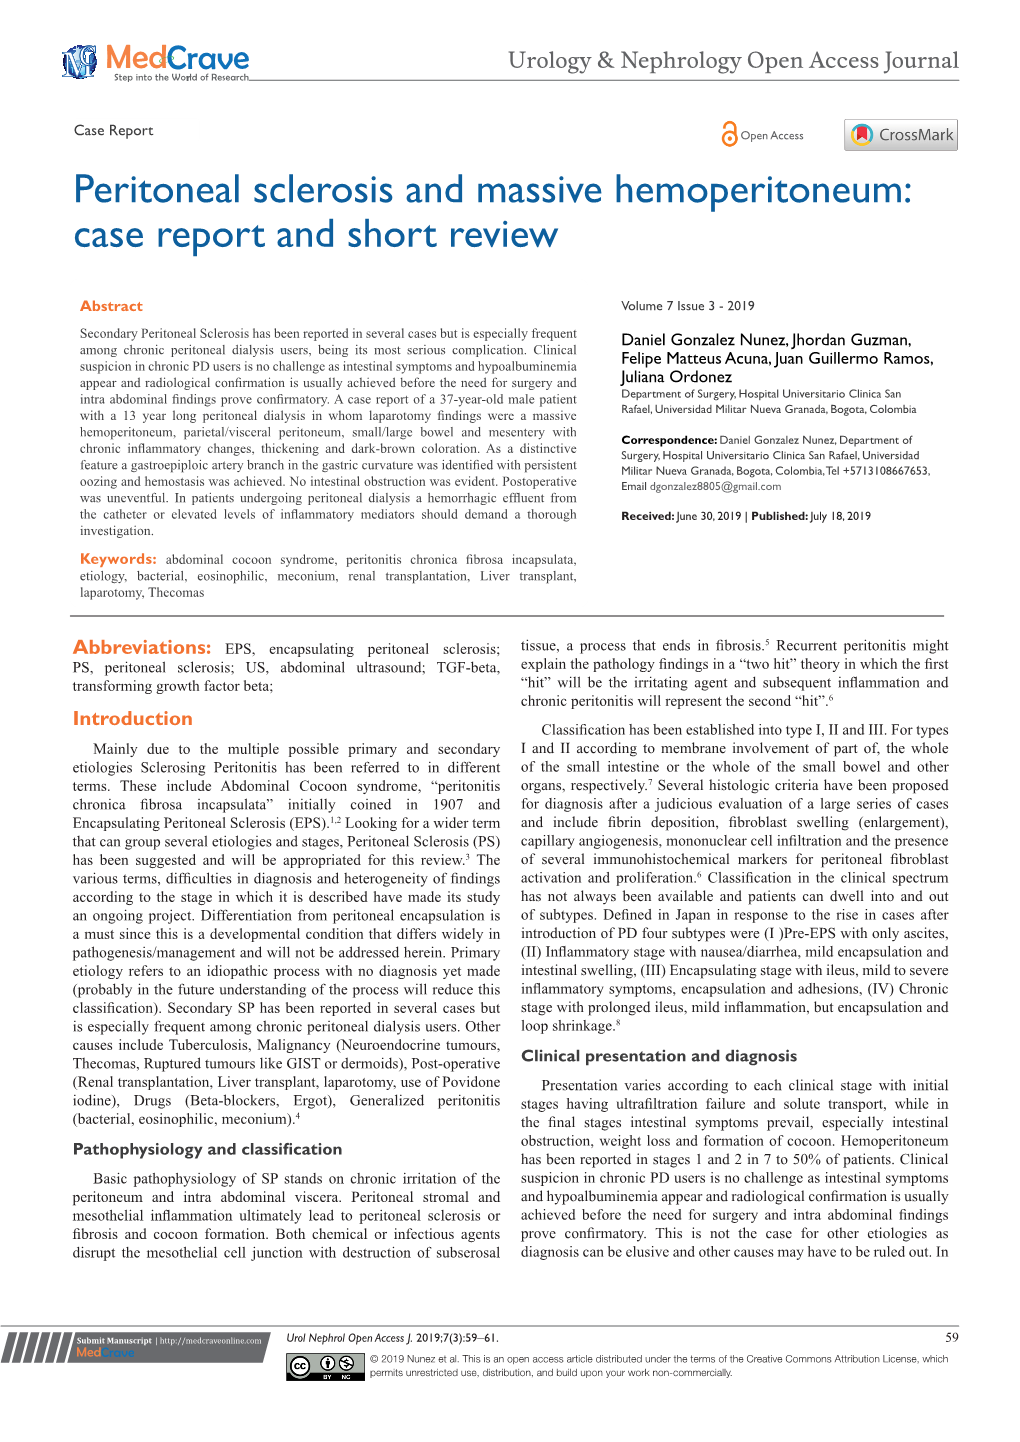 Peritoneal Sclerosis and Massive Hemoperitoneum: Case Report and Short Review